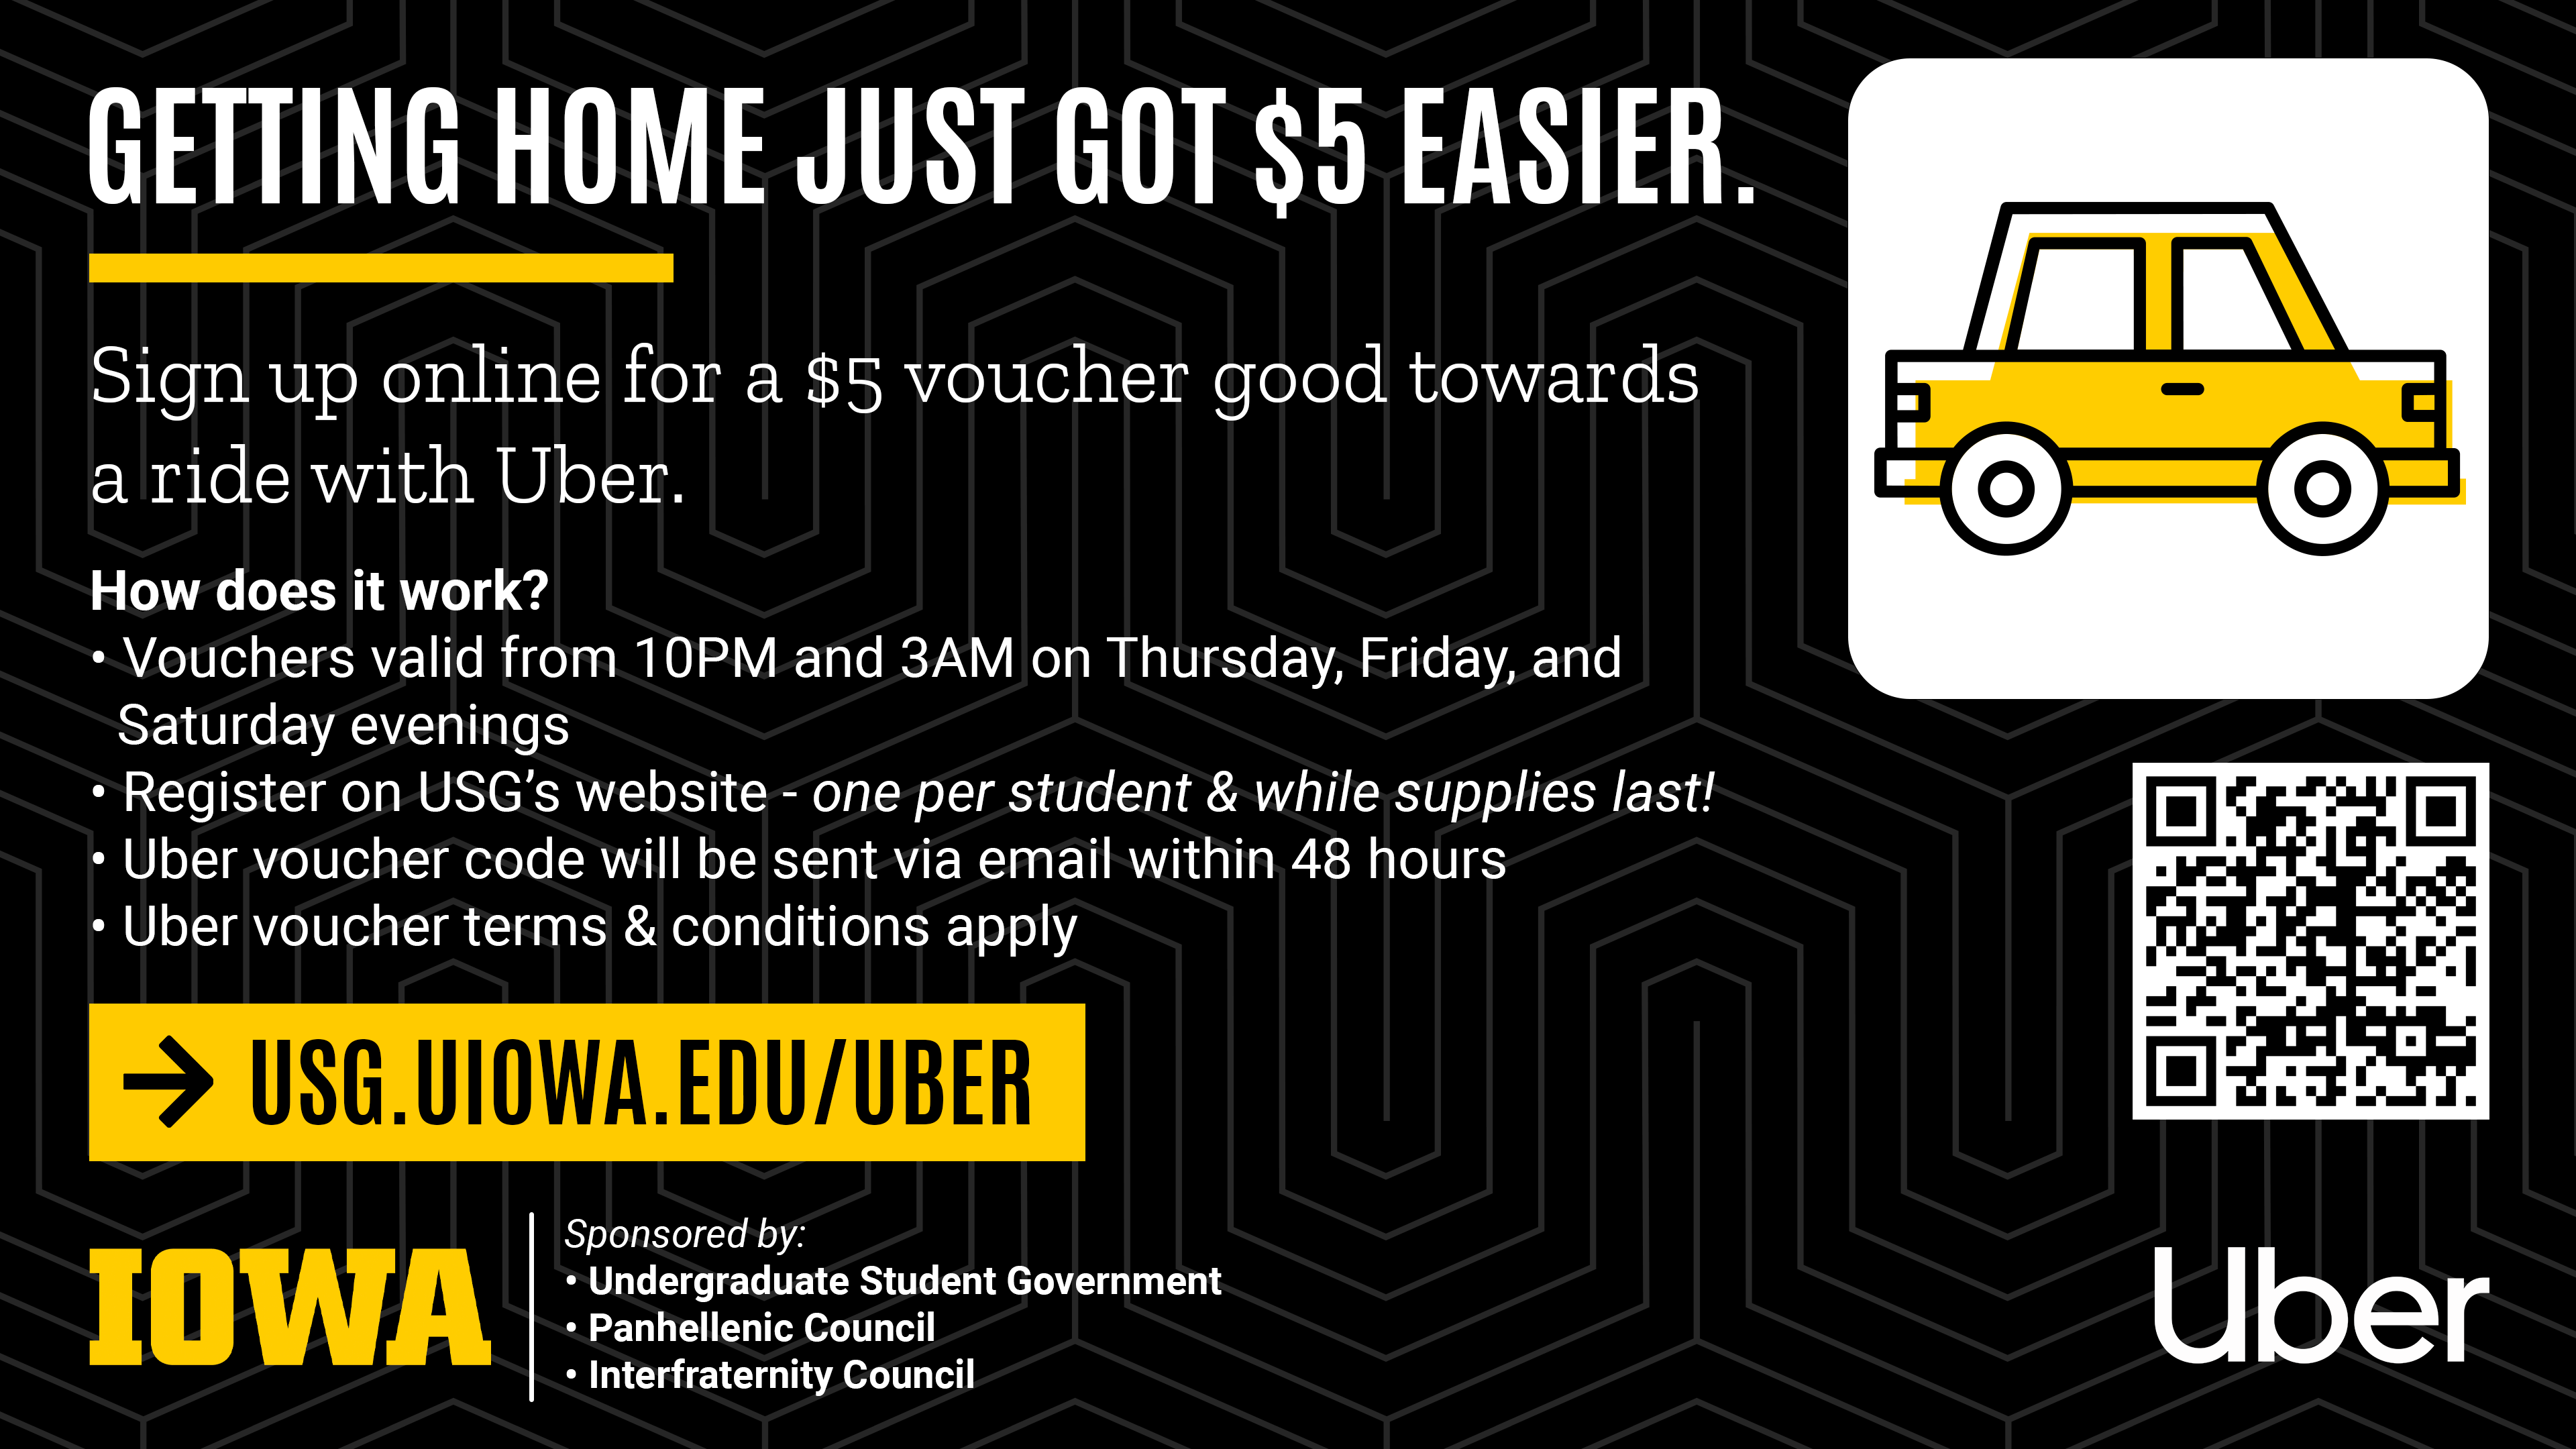 Sign up online for a $5 voucher good towards a ride with Uber: USG.UIOWA.EDU/UBER